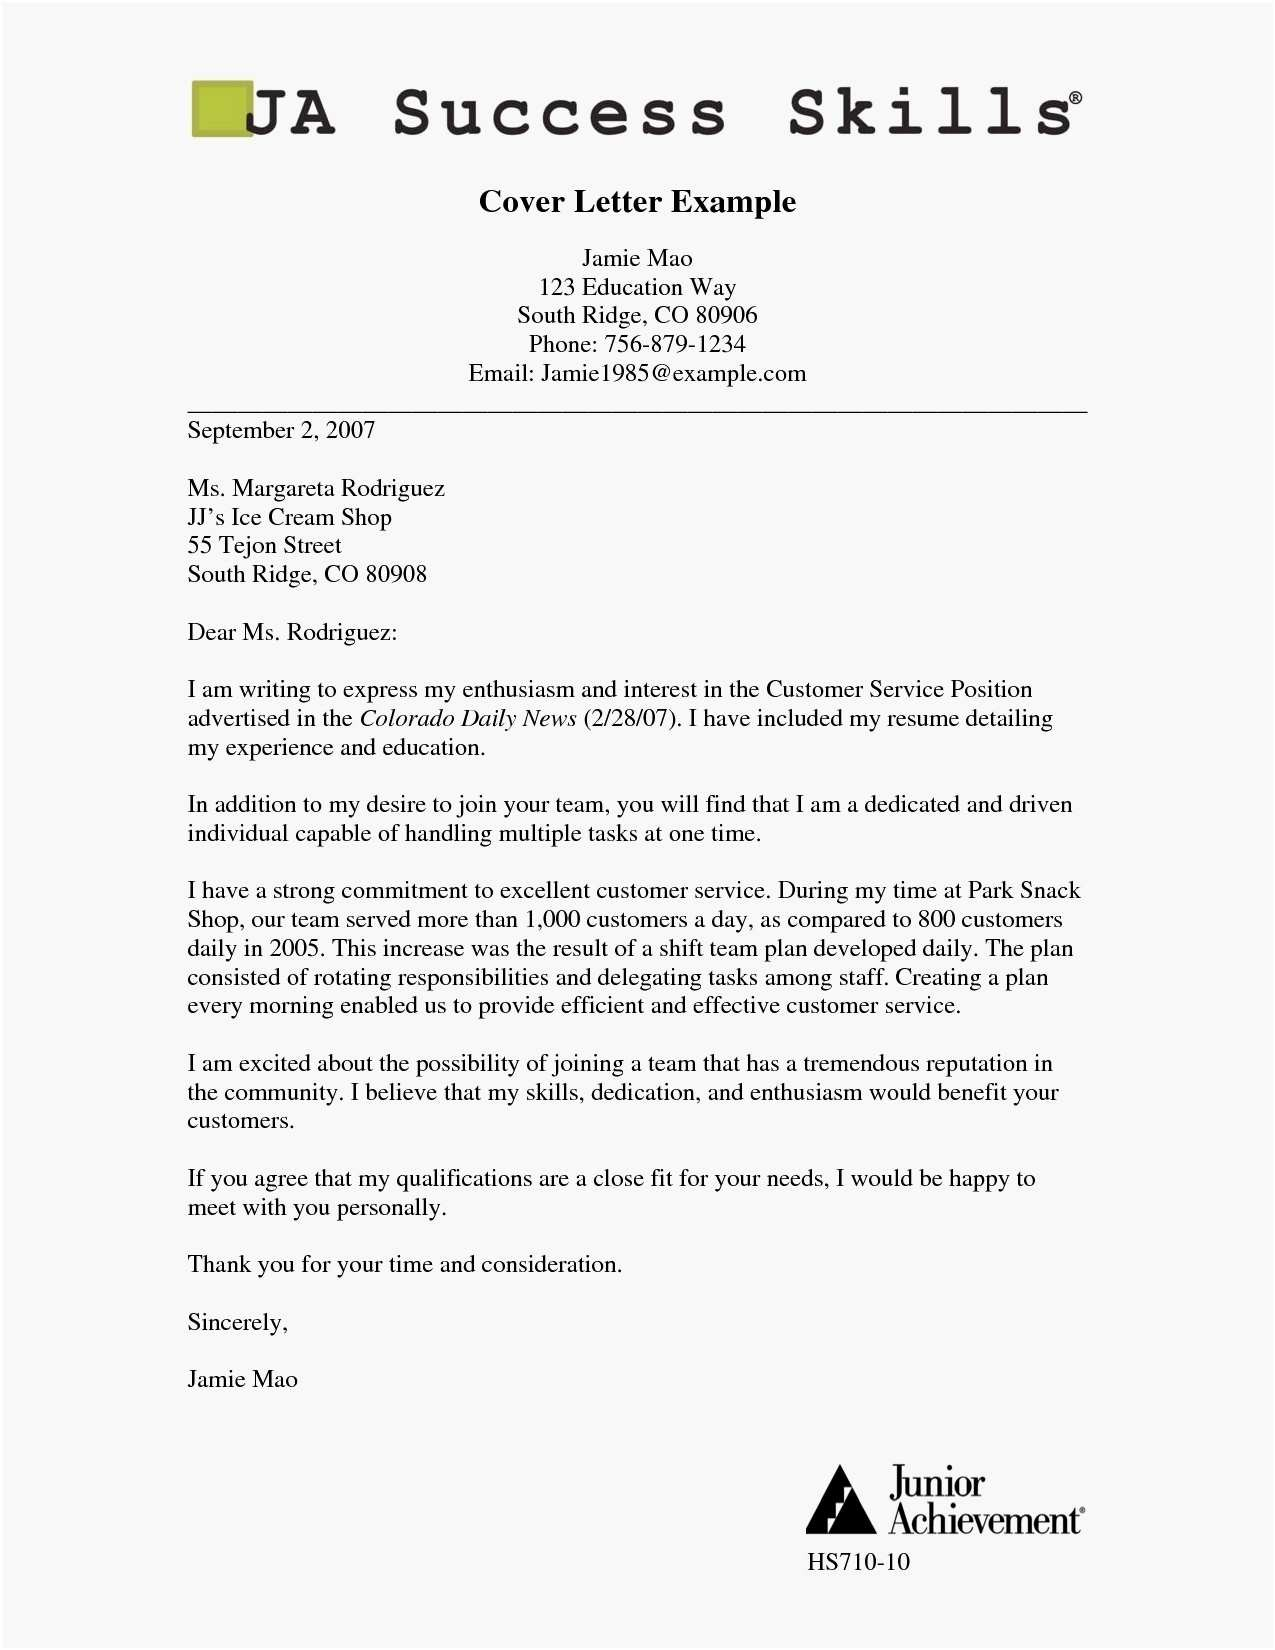 Marketing Letter Template - Letter format for Cover Letter Sample Cover Letter Employment